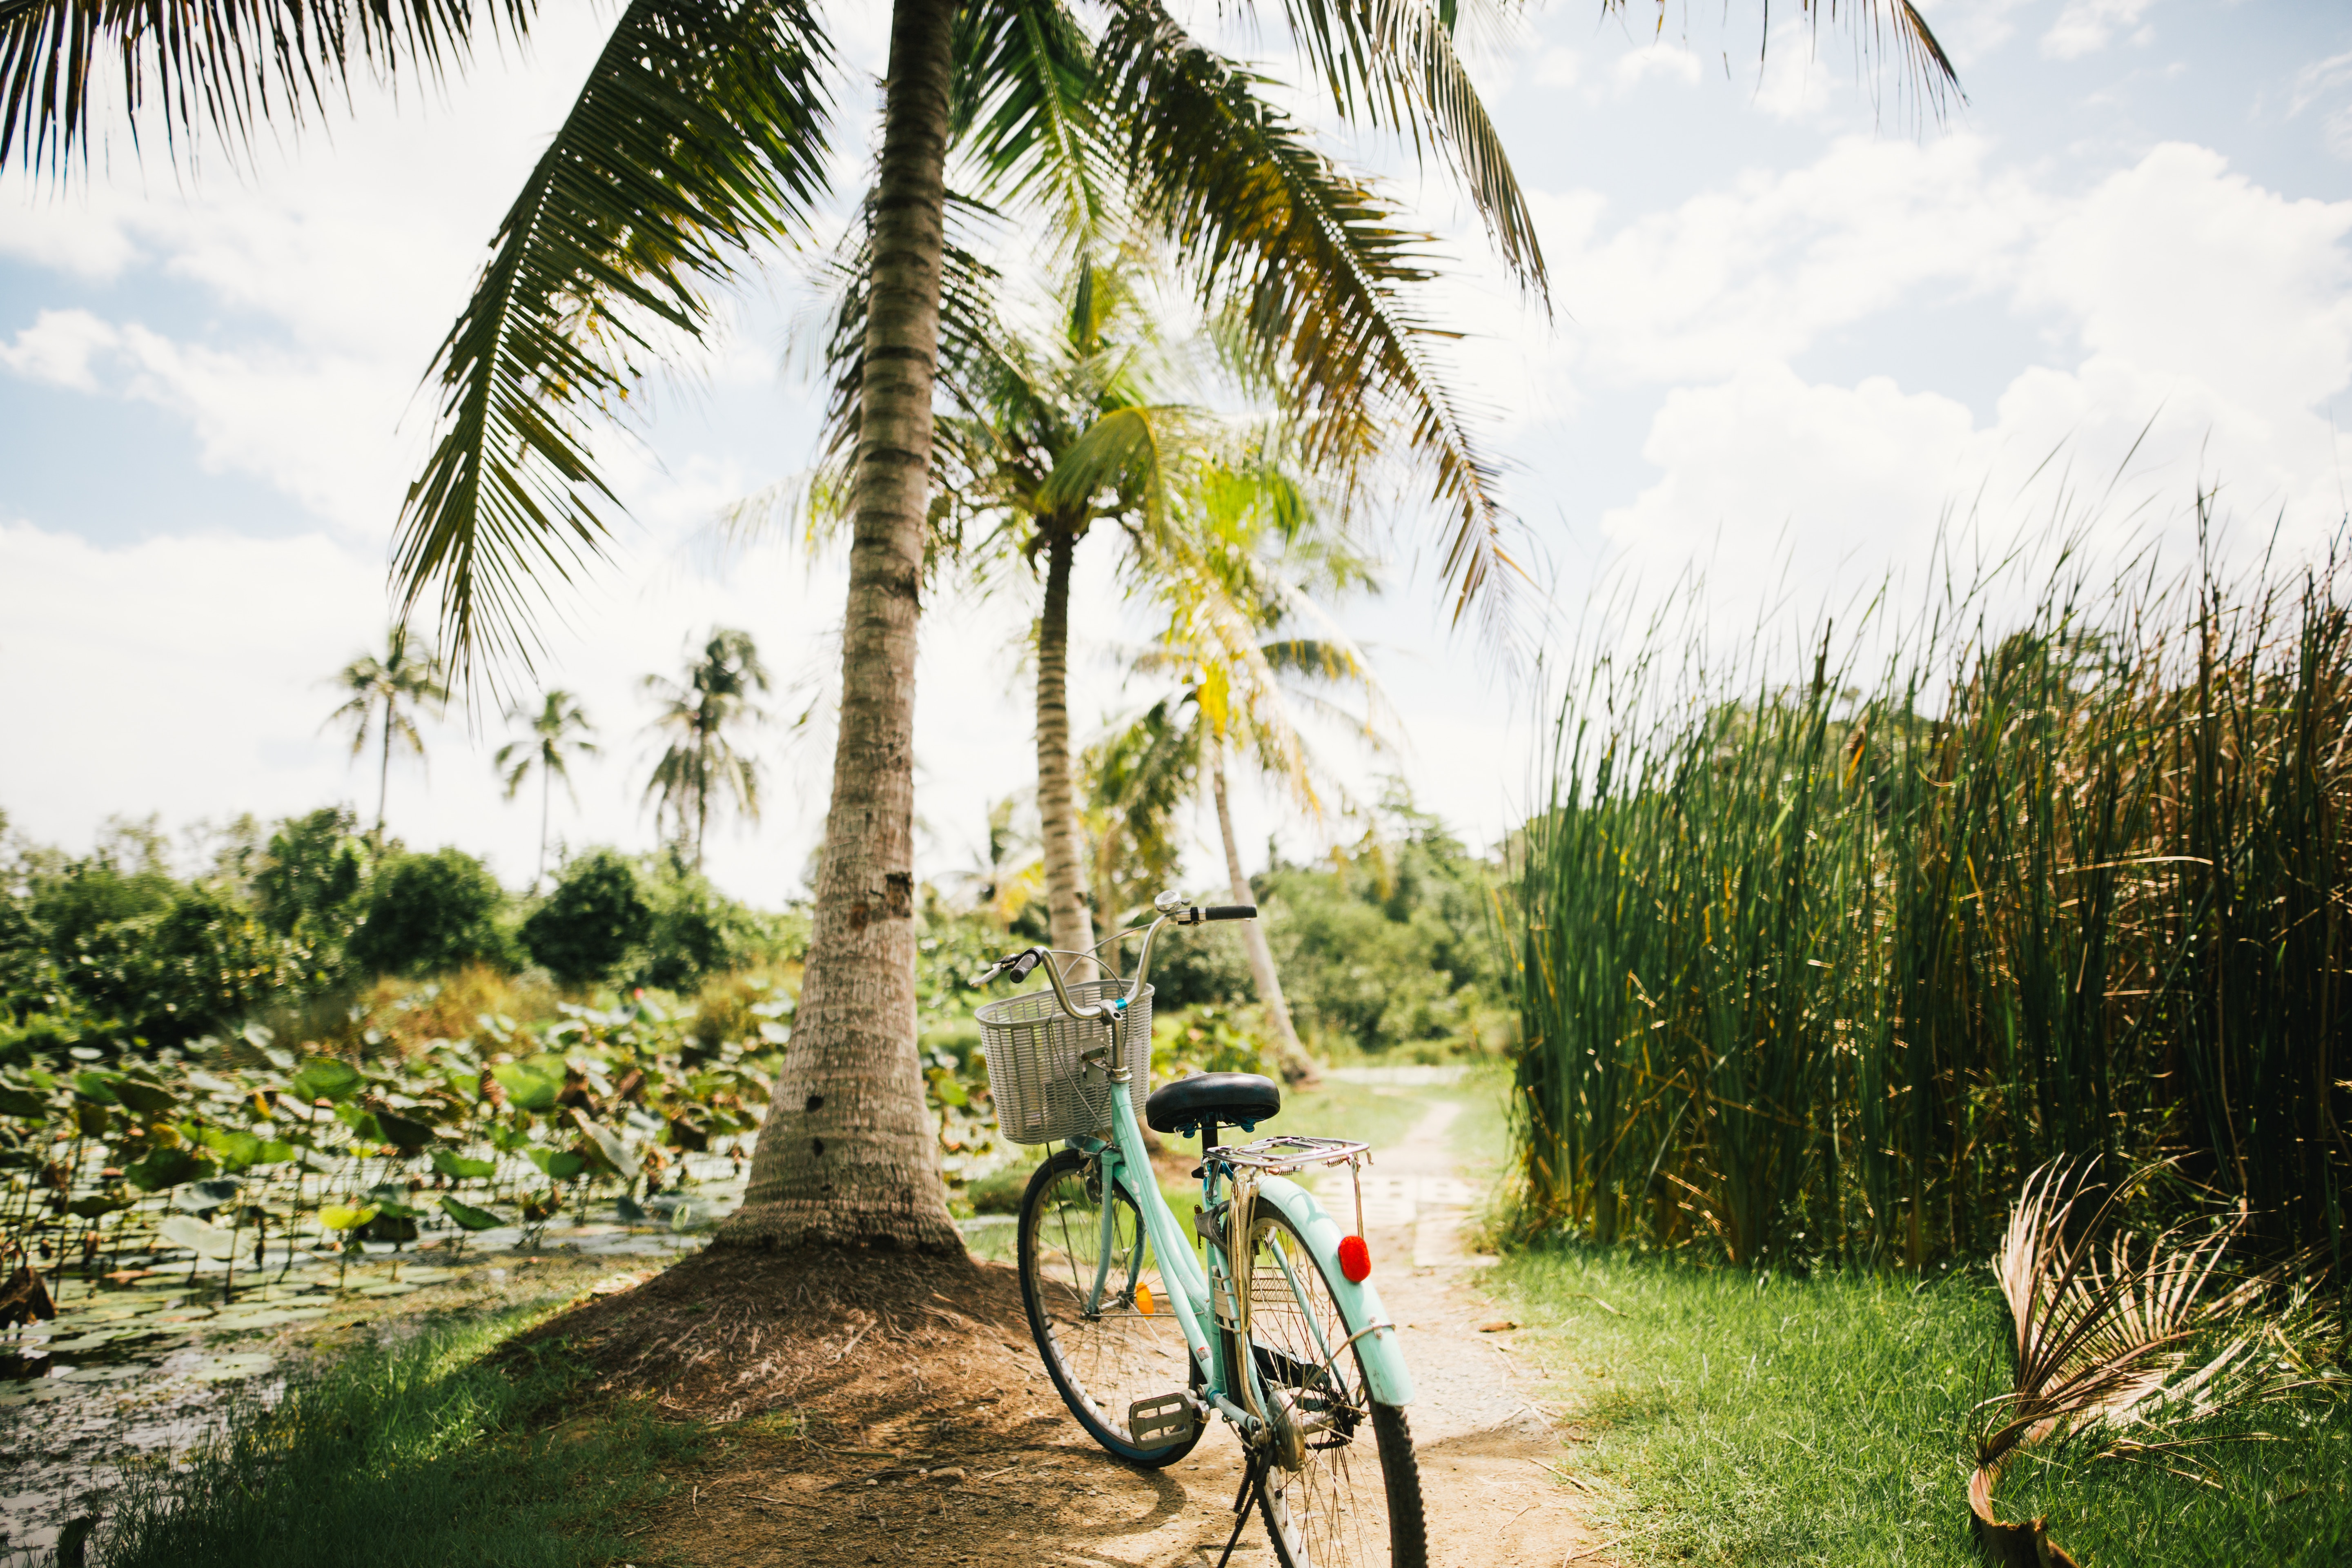 teal cruiser bike park beside the coconut tree